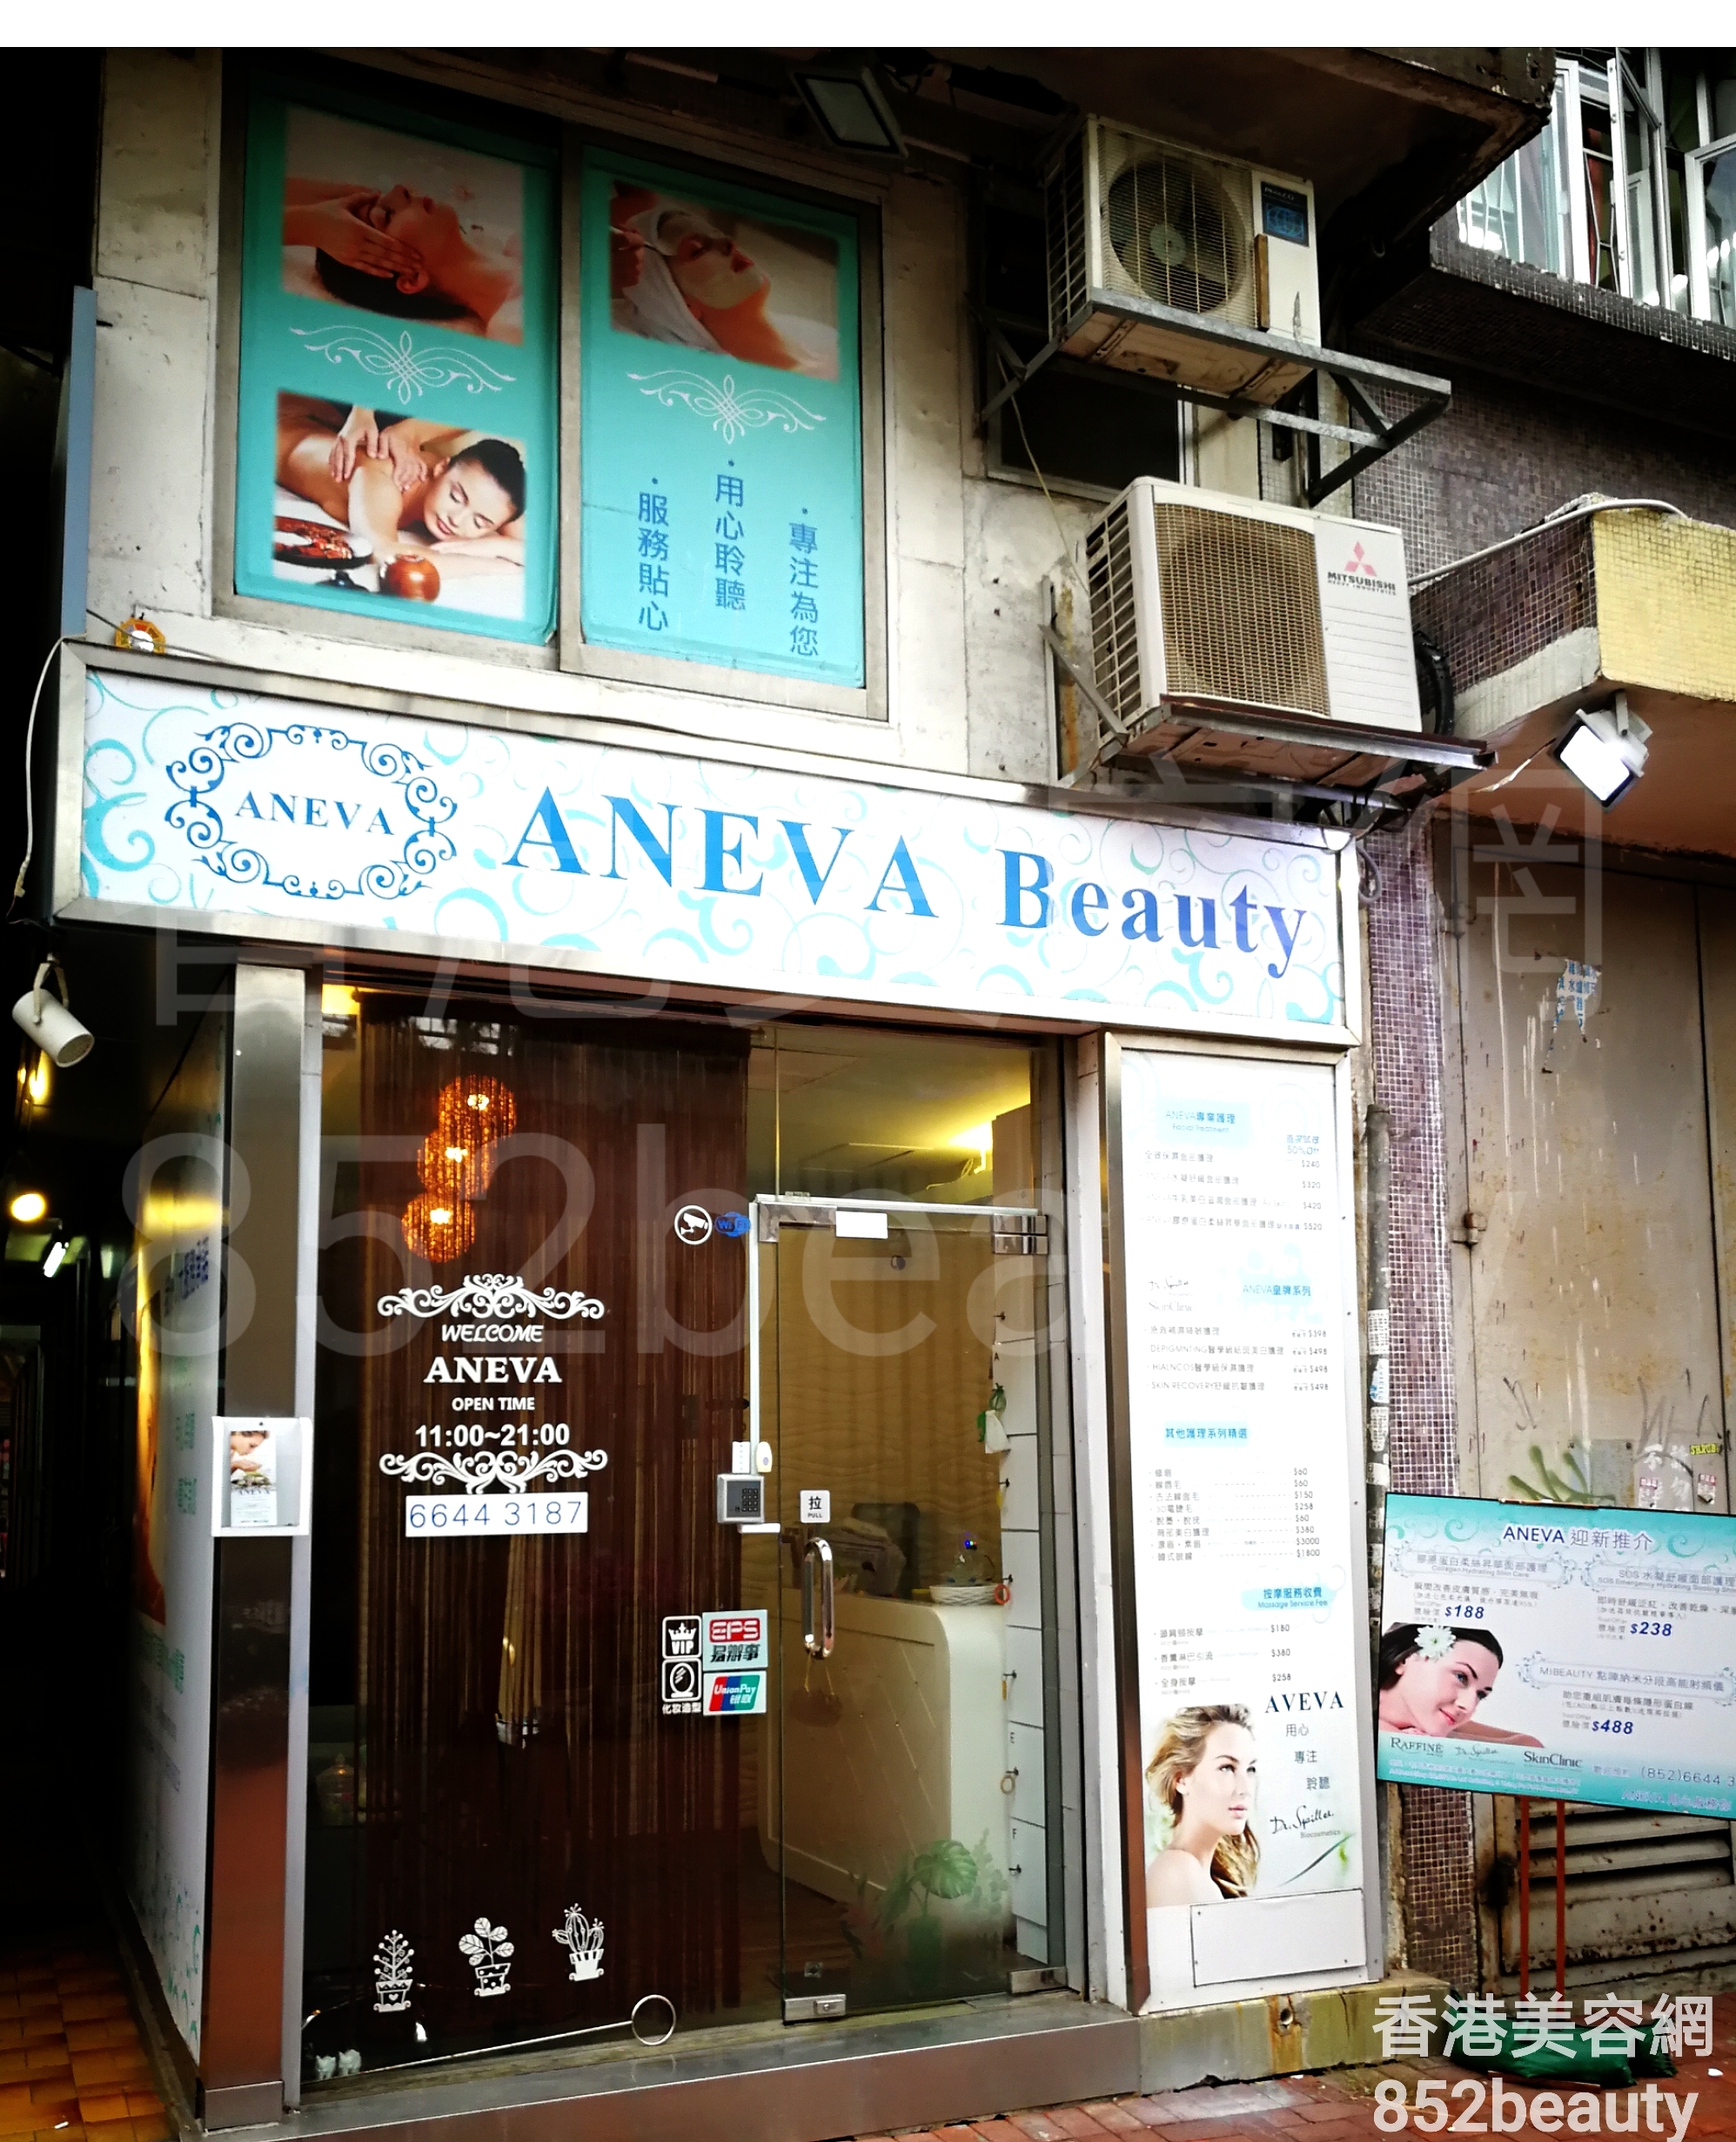 香港美容網 Hong Kong Beauty Salon 美容院 / 美容師: ANEVA Beauty